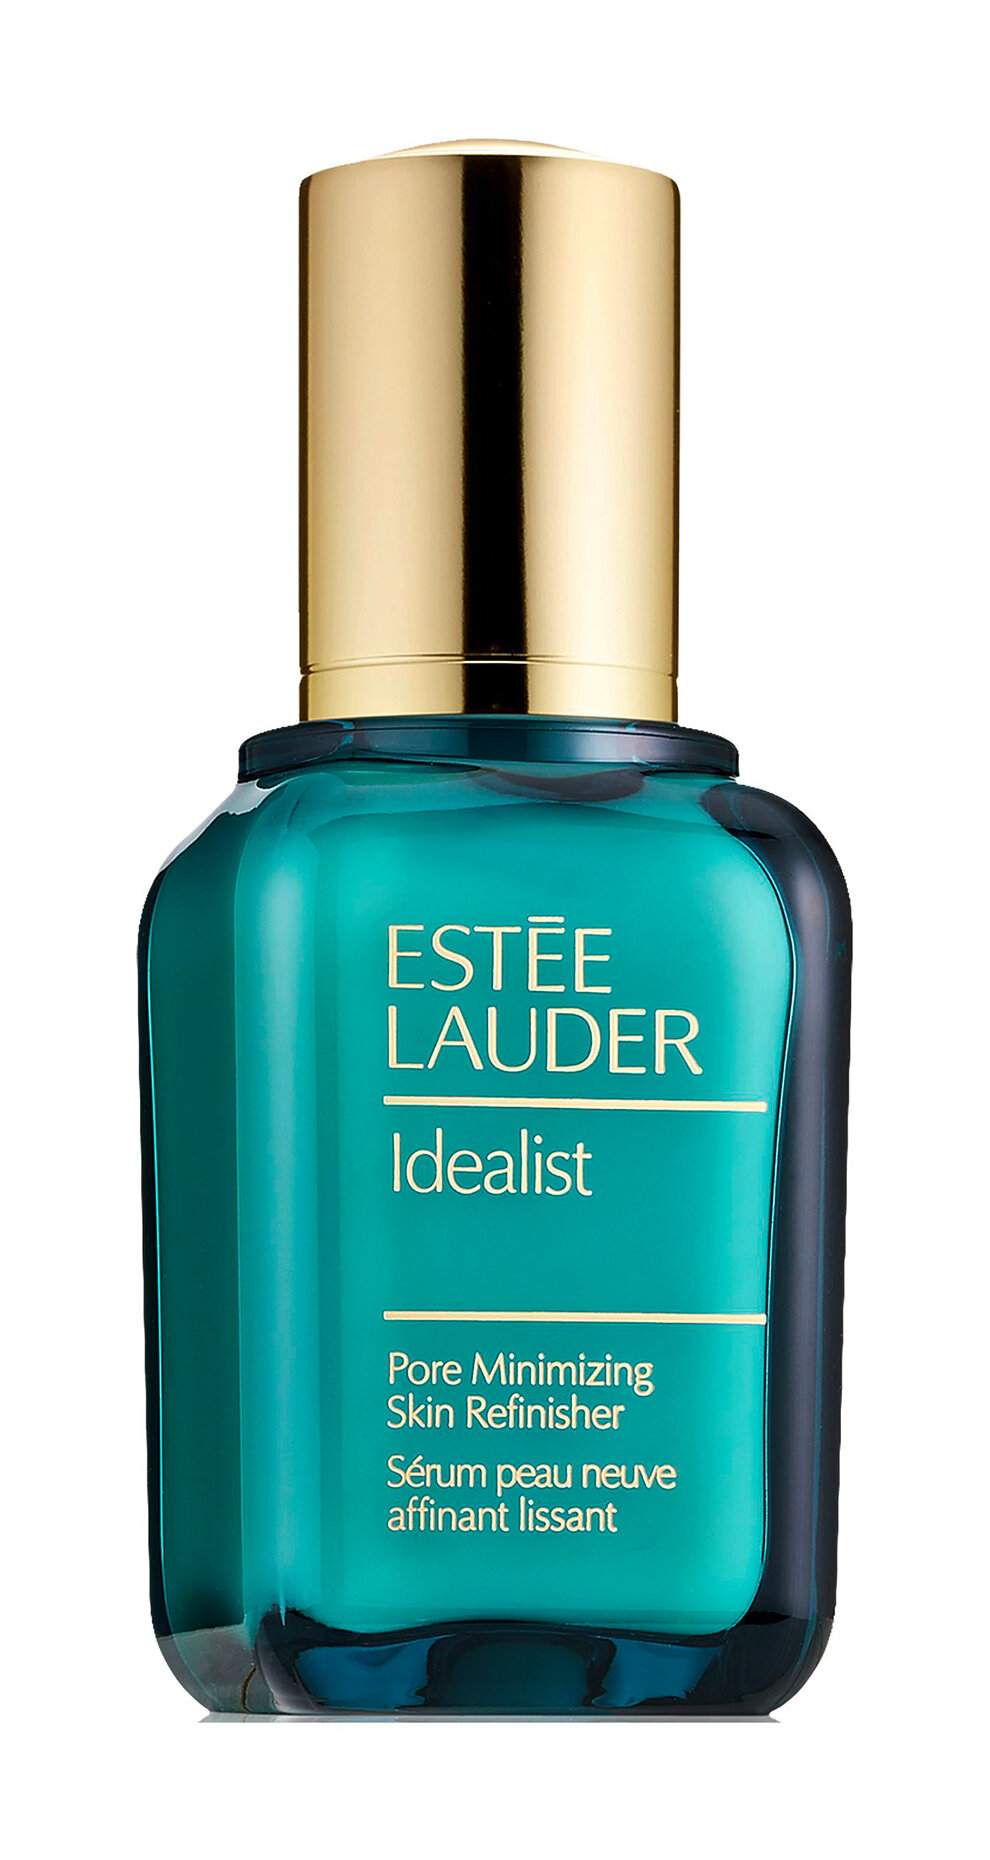 Estee Lauder Idealist Pore Minimizing Skin Refinisher Сыворотка для лица сужающая поры, 50 мл